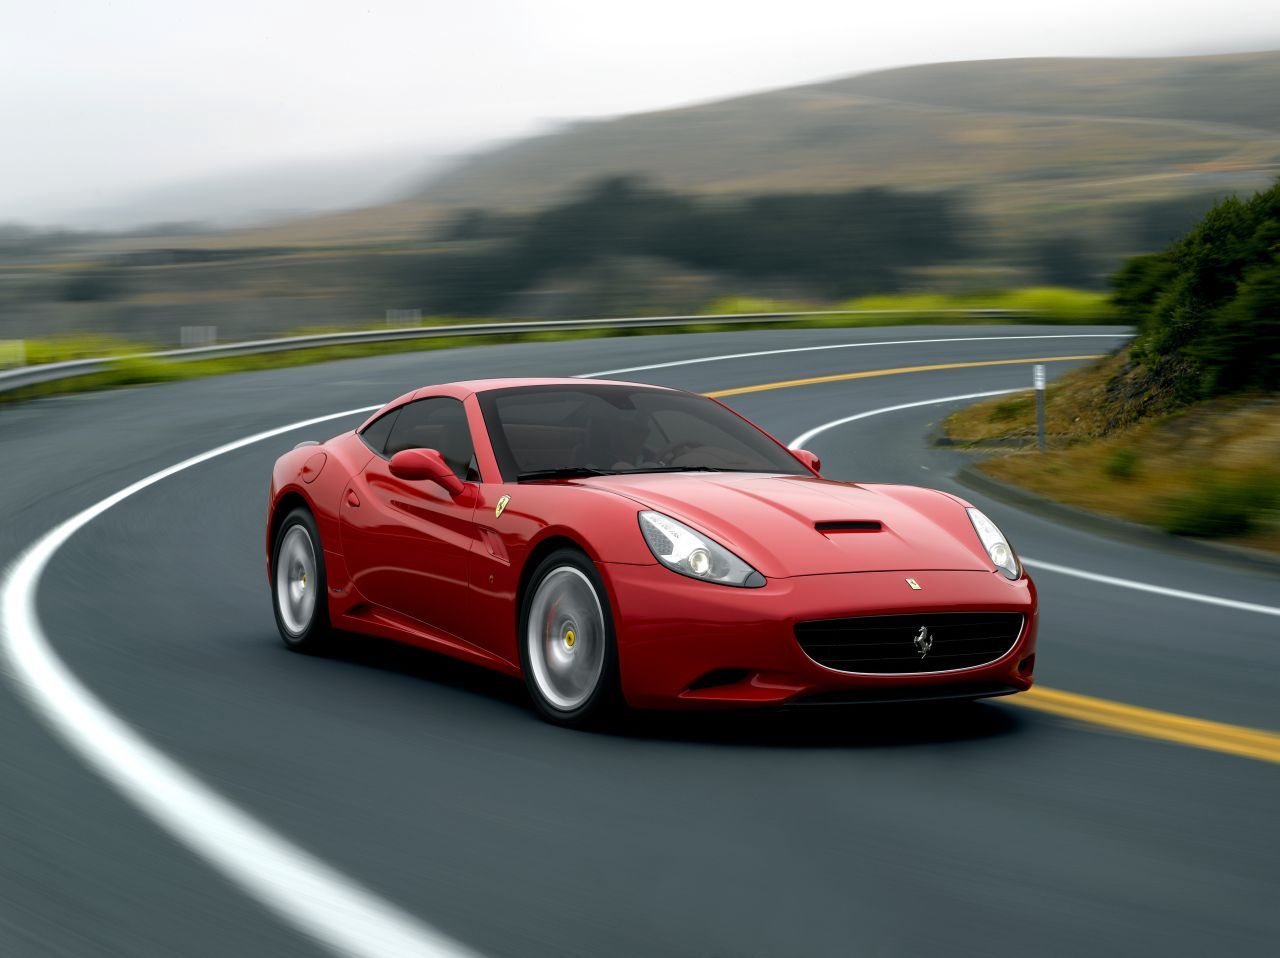 2009 Ferrari California - Overview - CarGurus